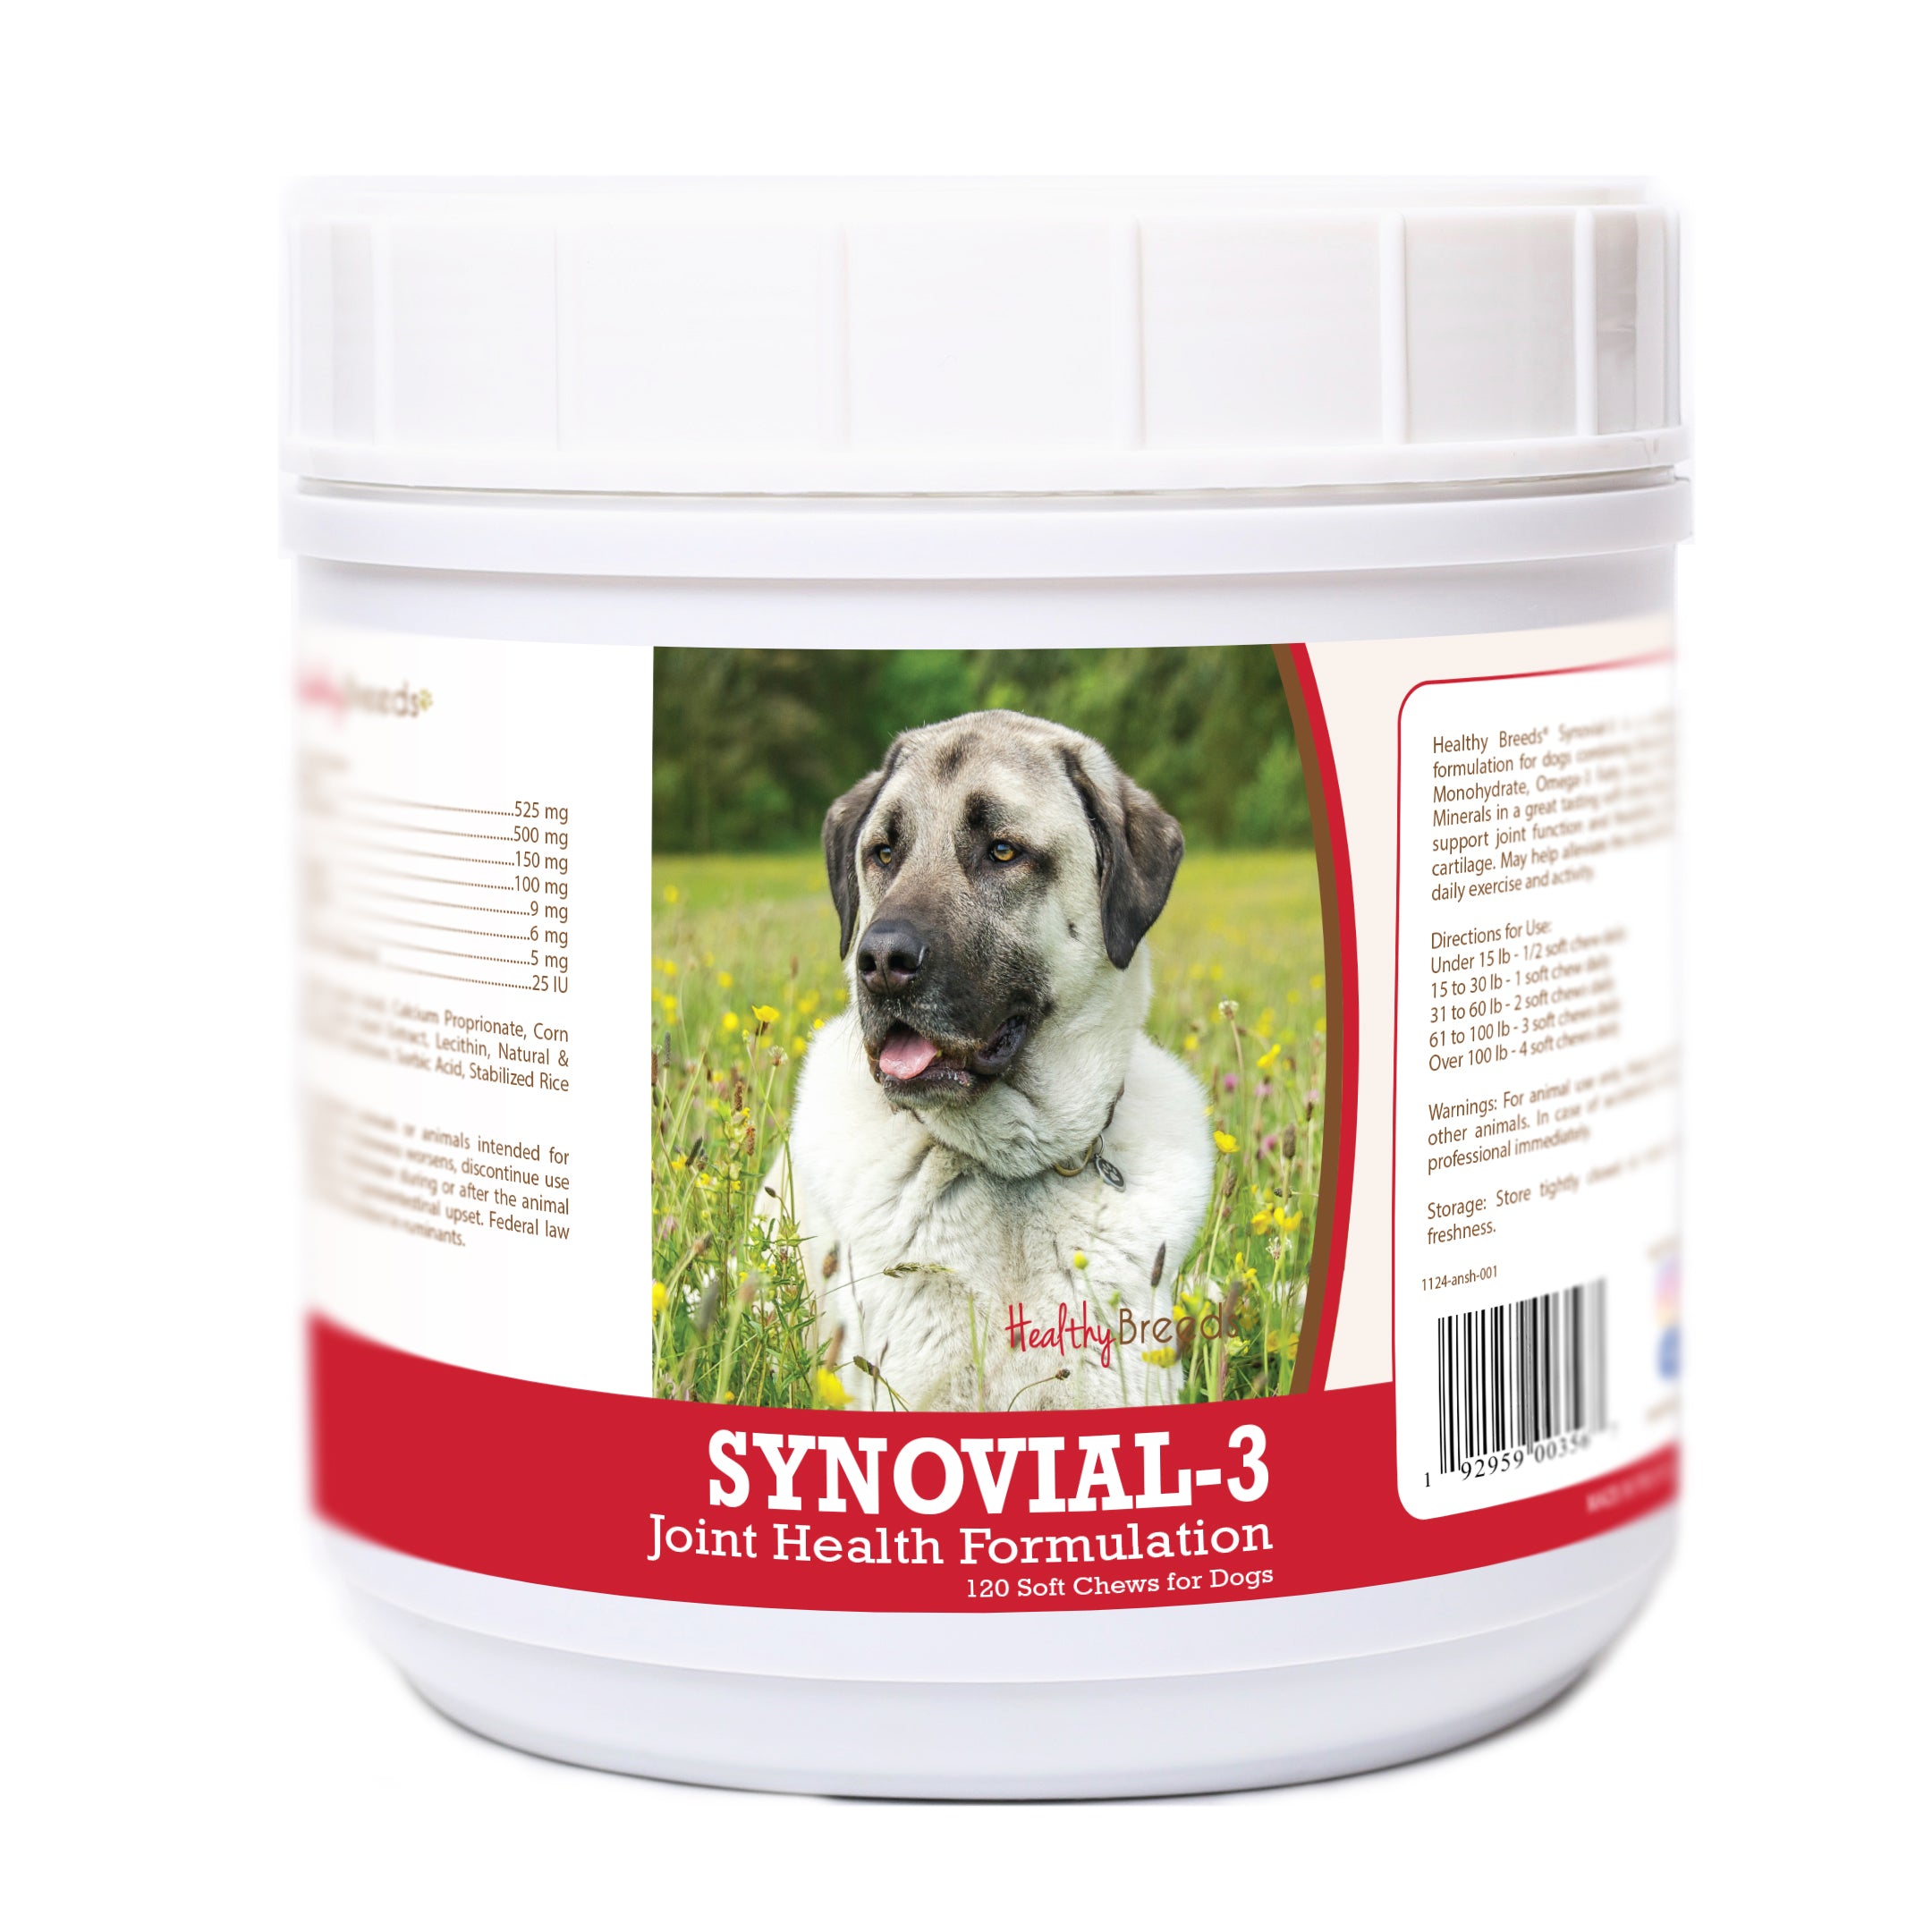 Anatolian Shepherd Dog Synovial-3 Joint Health Formulation Soft Chews 120 Count